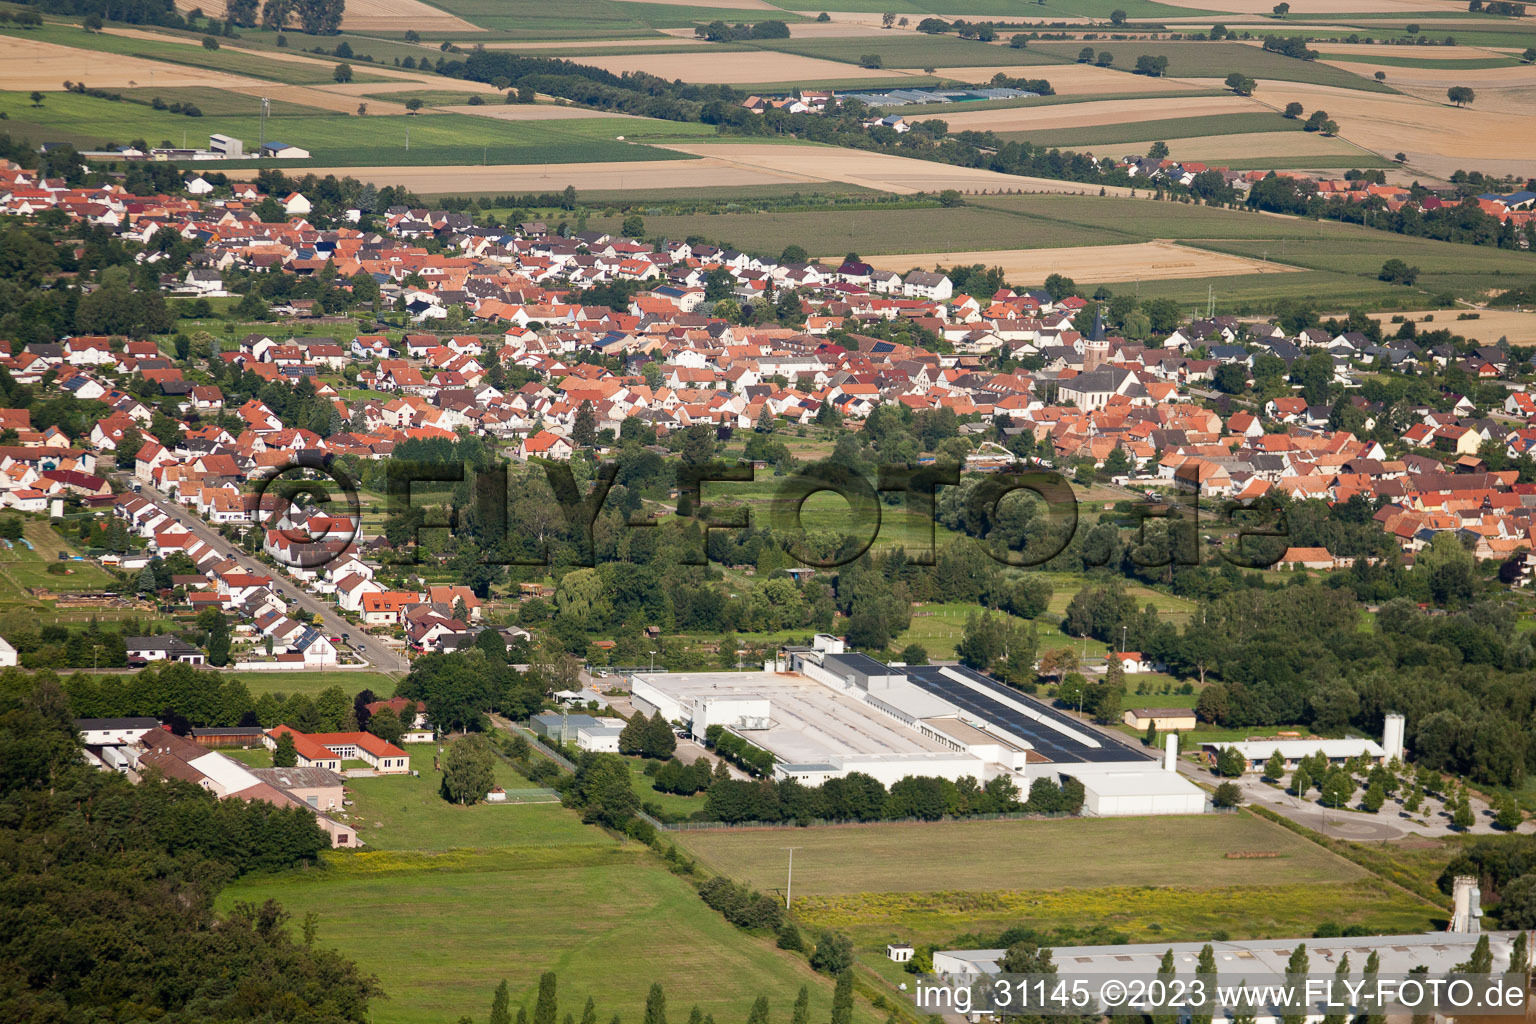 Drone recording of District Schaidt in Wörth am Rhein in the state Rhineland-Palatinate, Germany